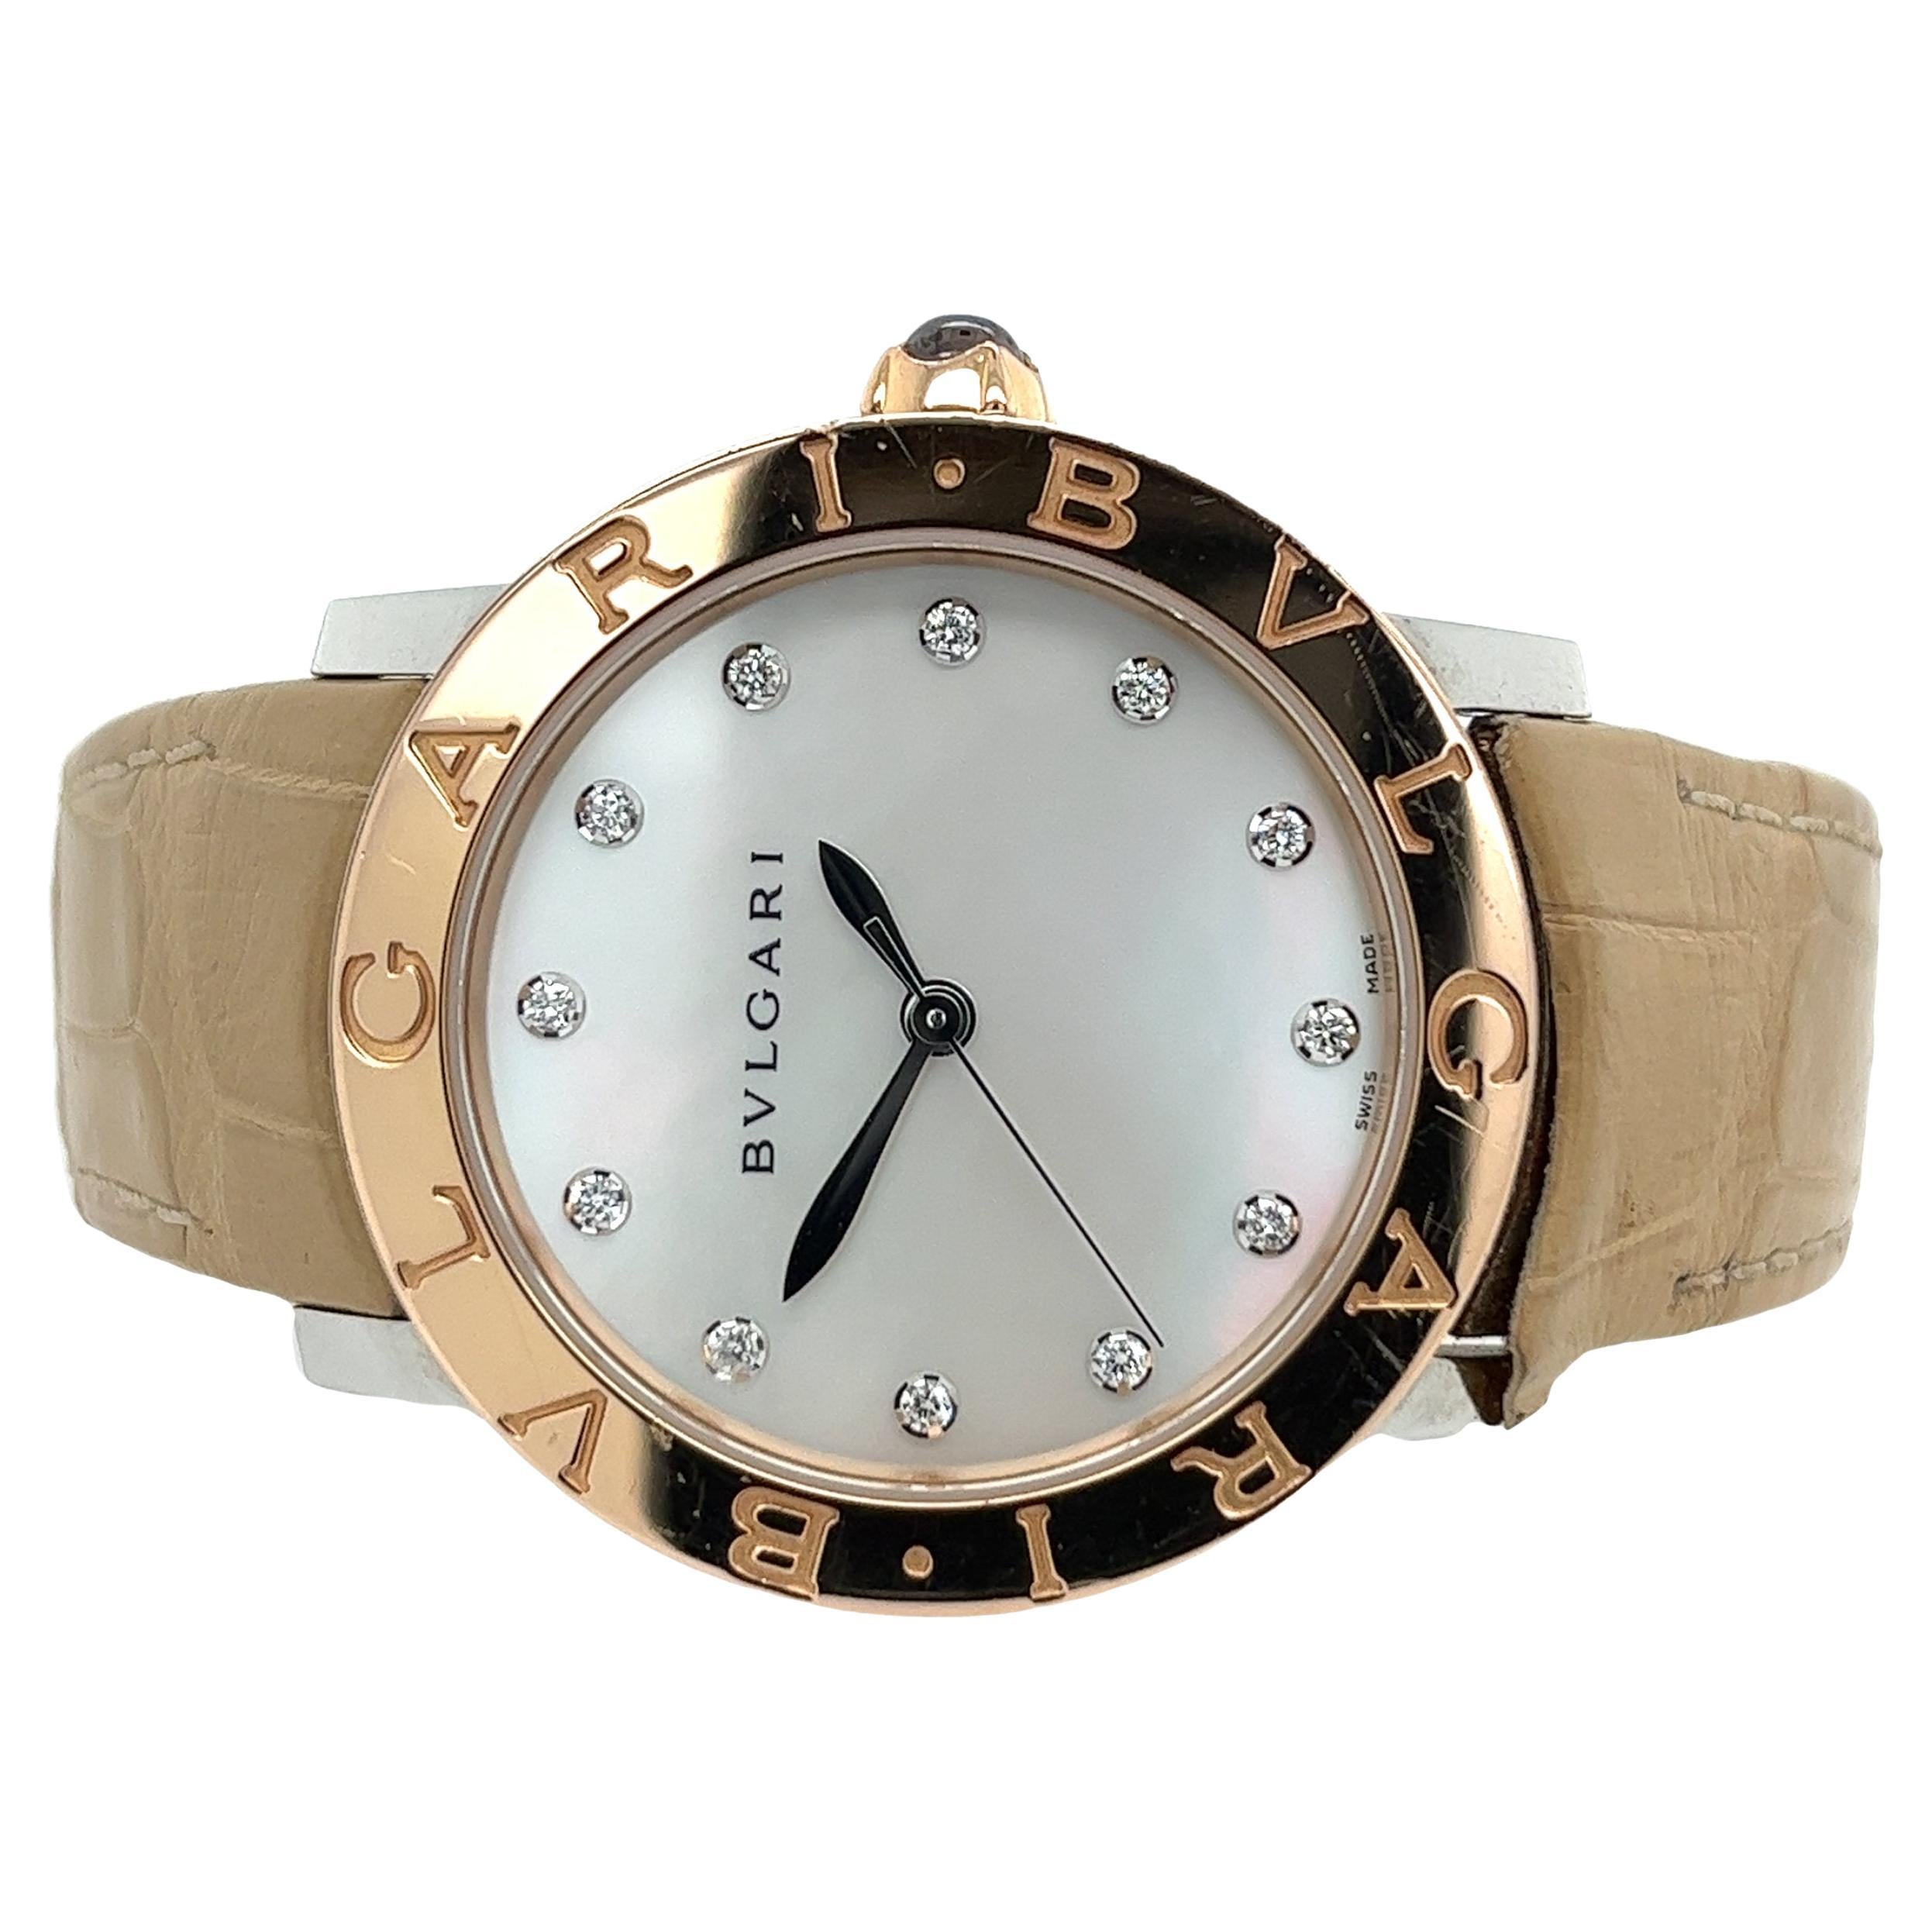 Bvlgari Ladies Wrist Watch Automatic with Diamonds Dial, Ref. BBL P33SG